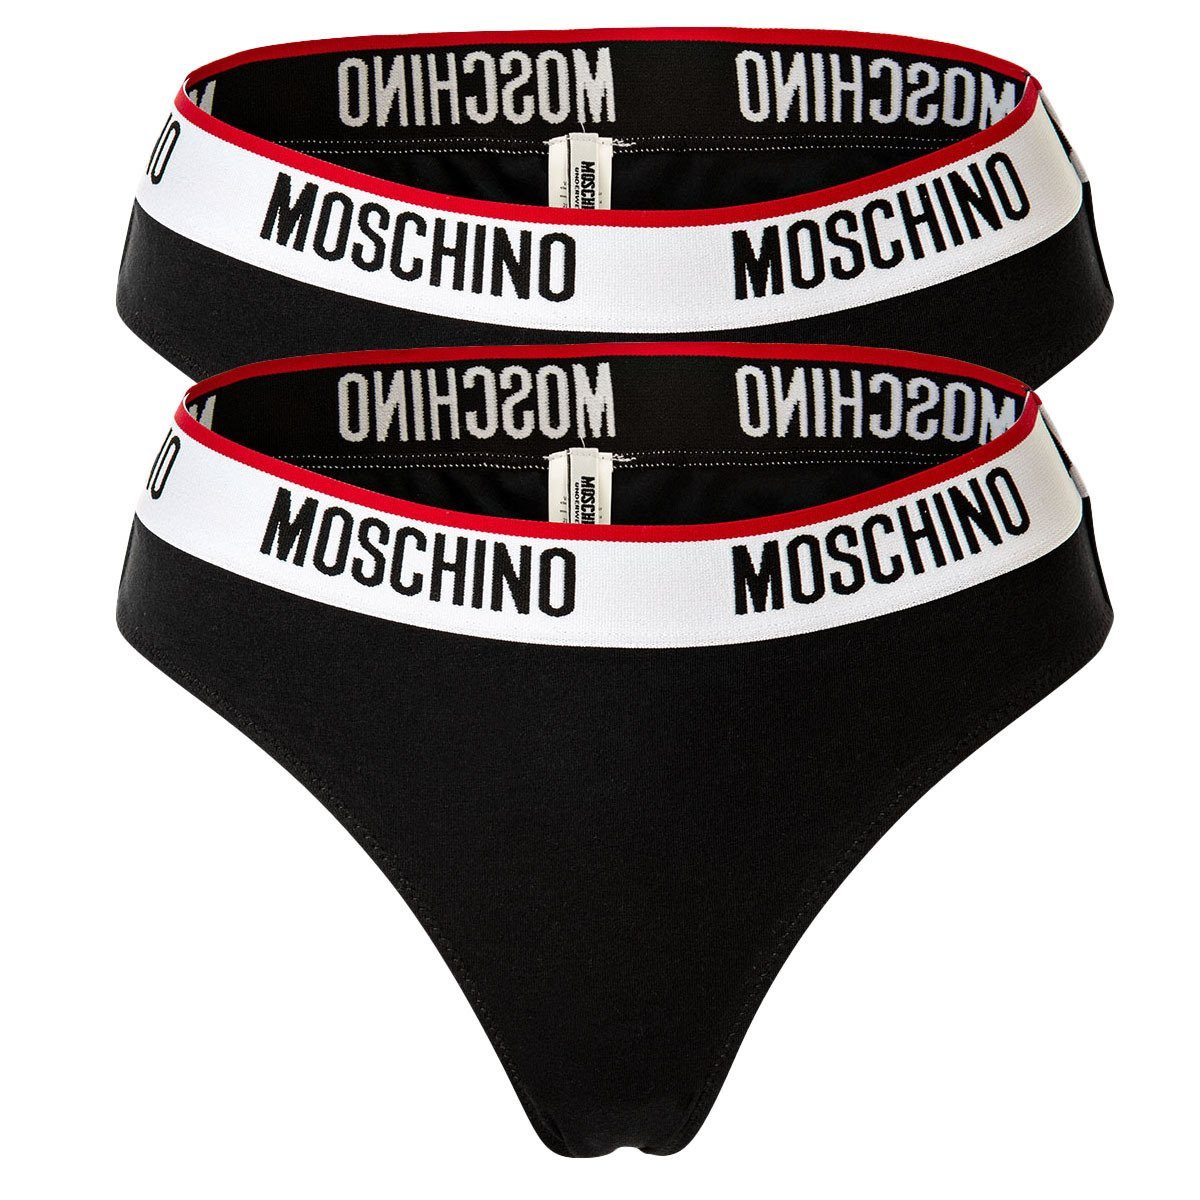 Moschino Slip Damen Brazilian Slips 2er Pack - Unterhose Schwarz